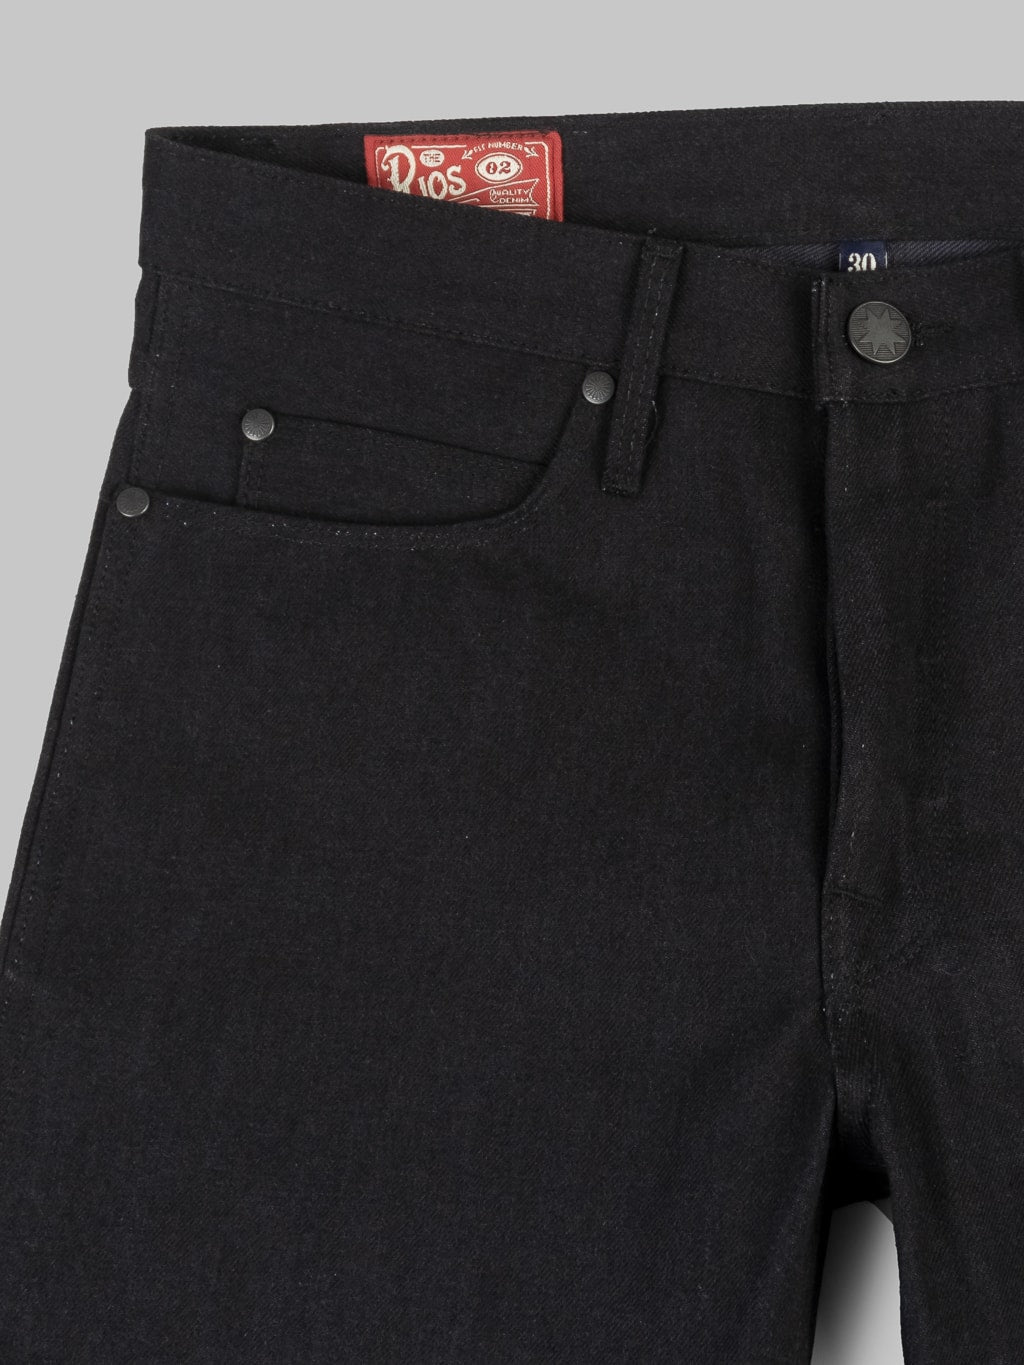 Freenote Cloth Rios Black Grey Japanese Denim Slim Straight Jeans front pocket